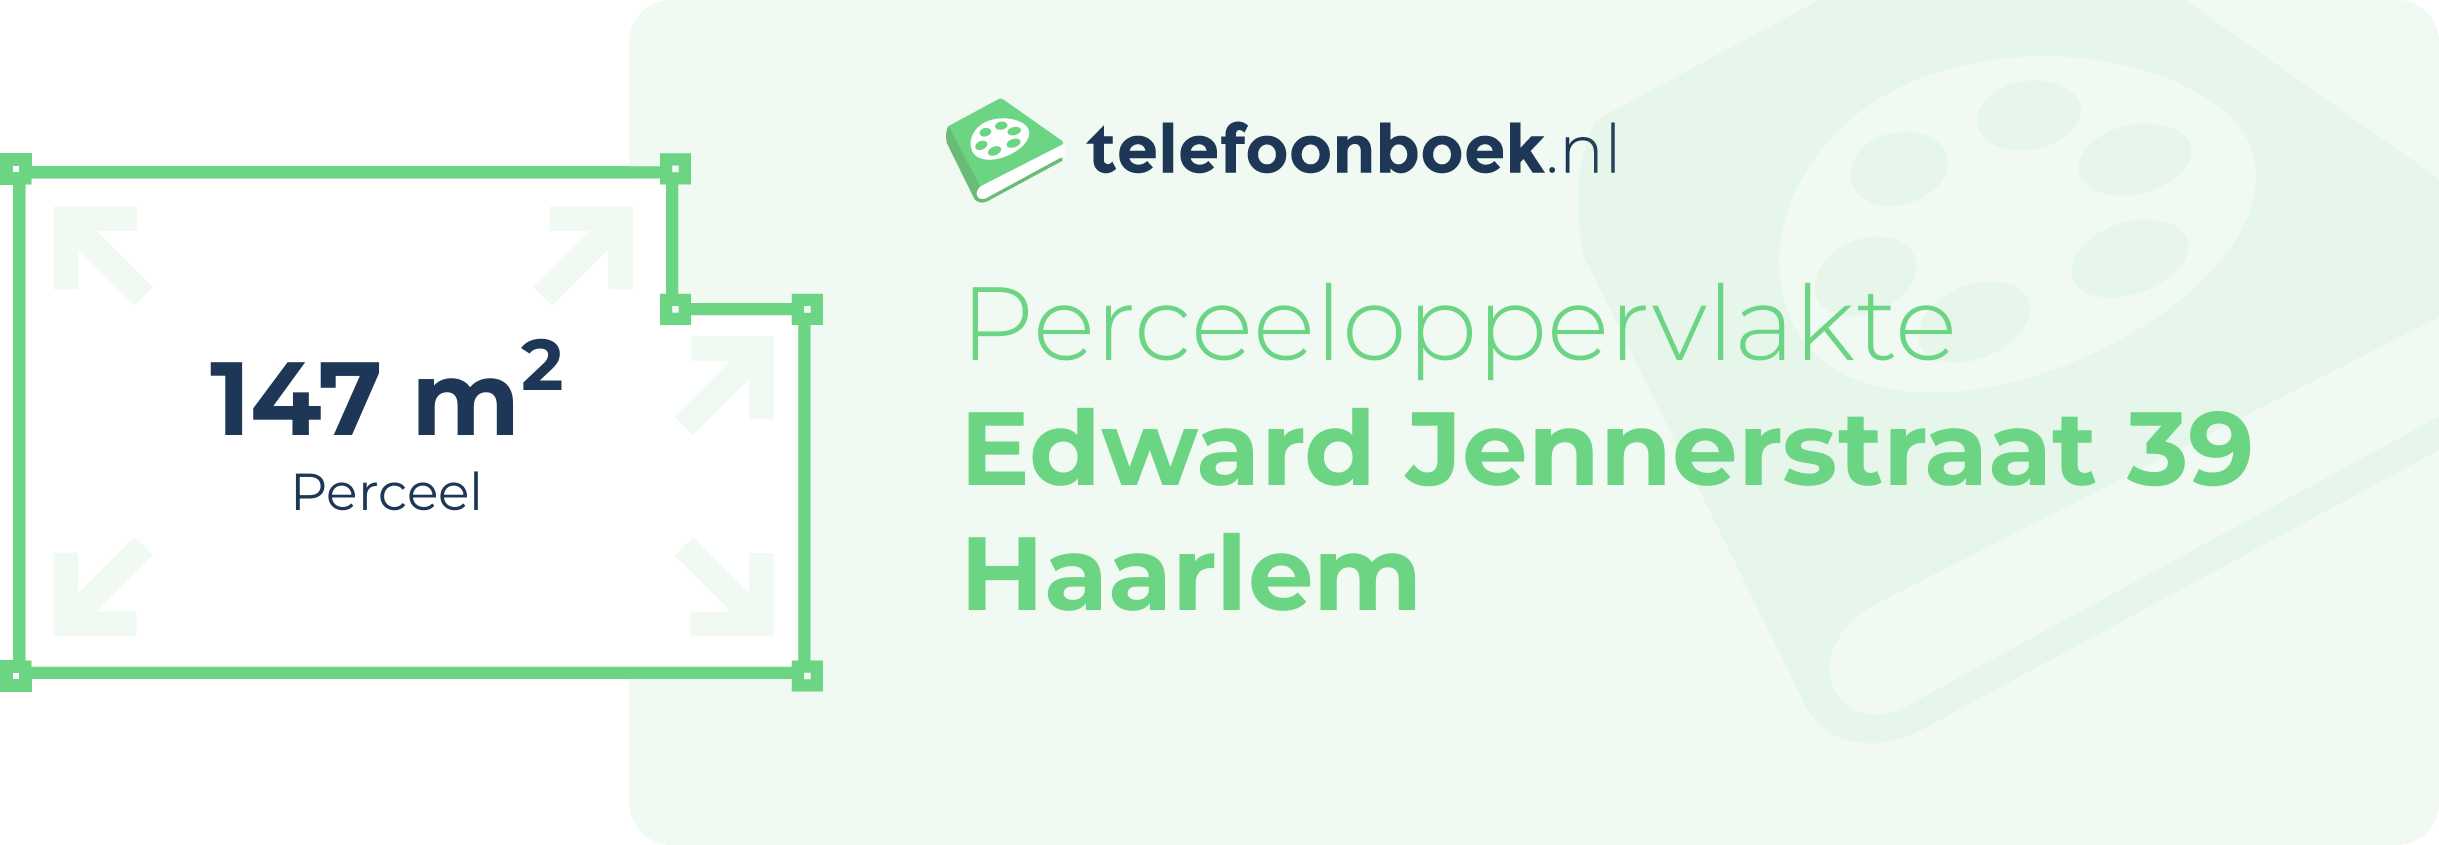 Perceeloppervlakte Edward Jennerstraat 39 Haarlem